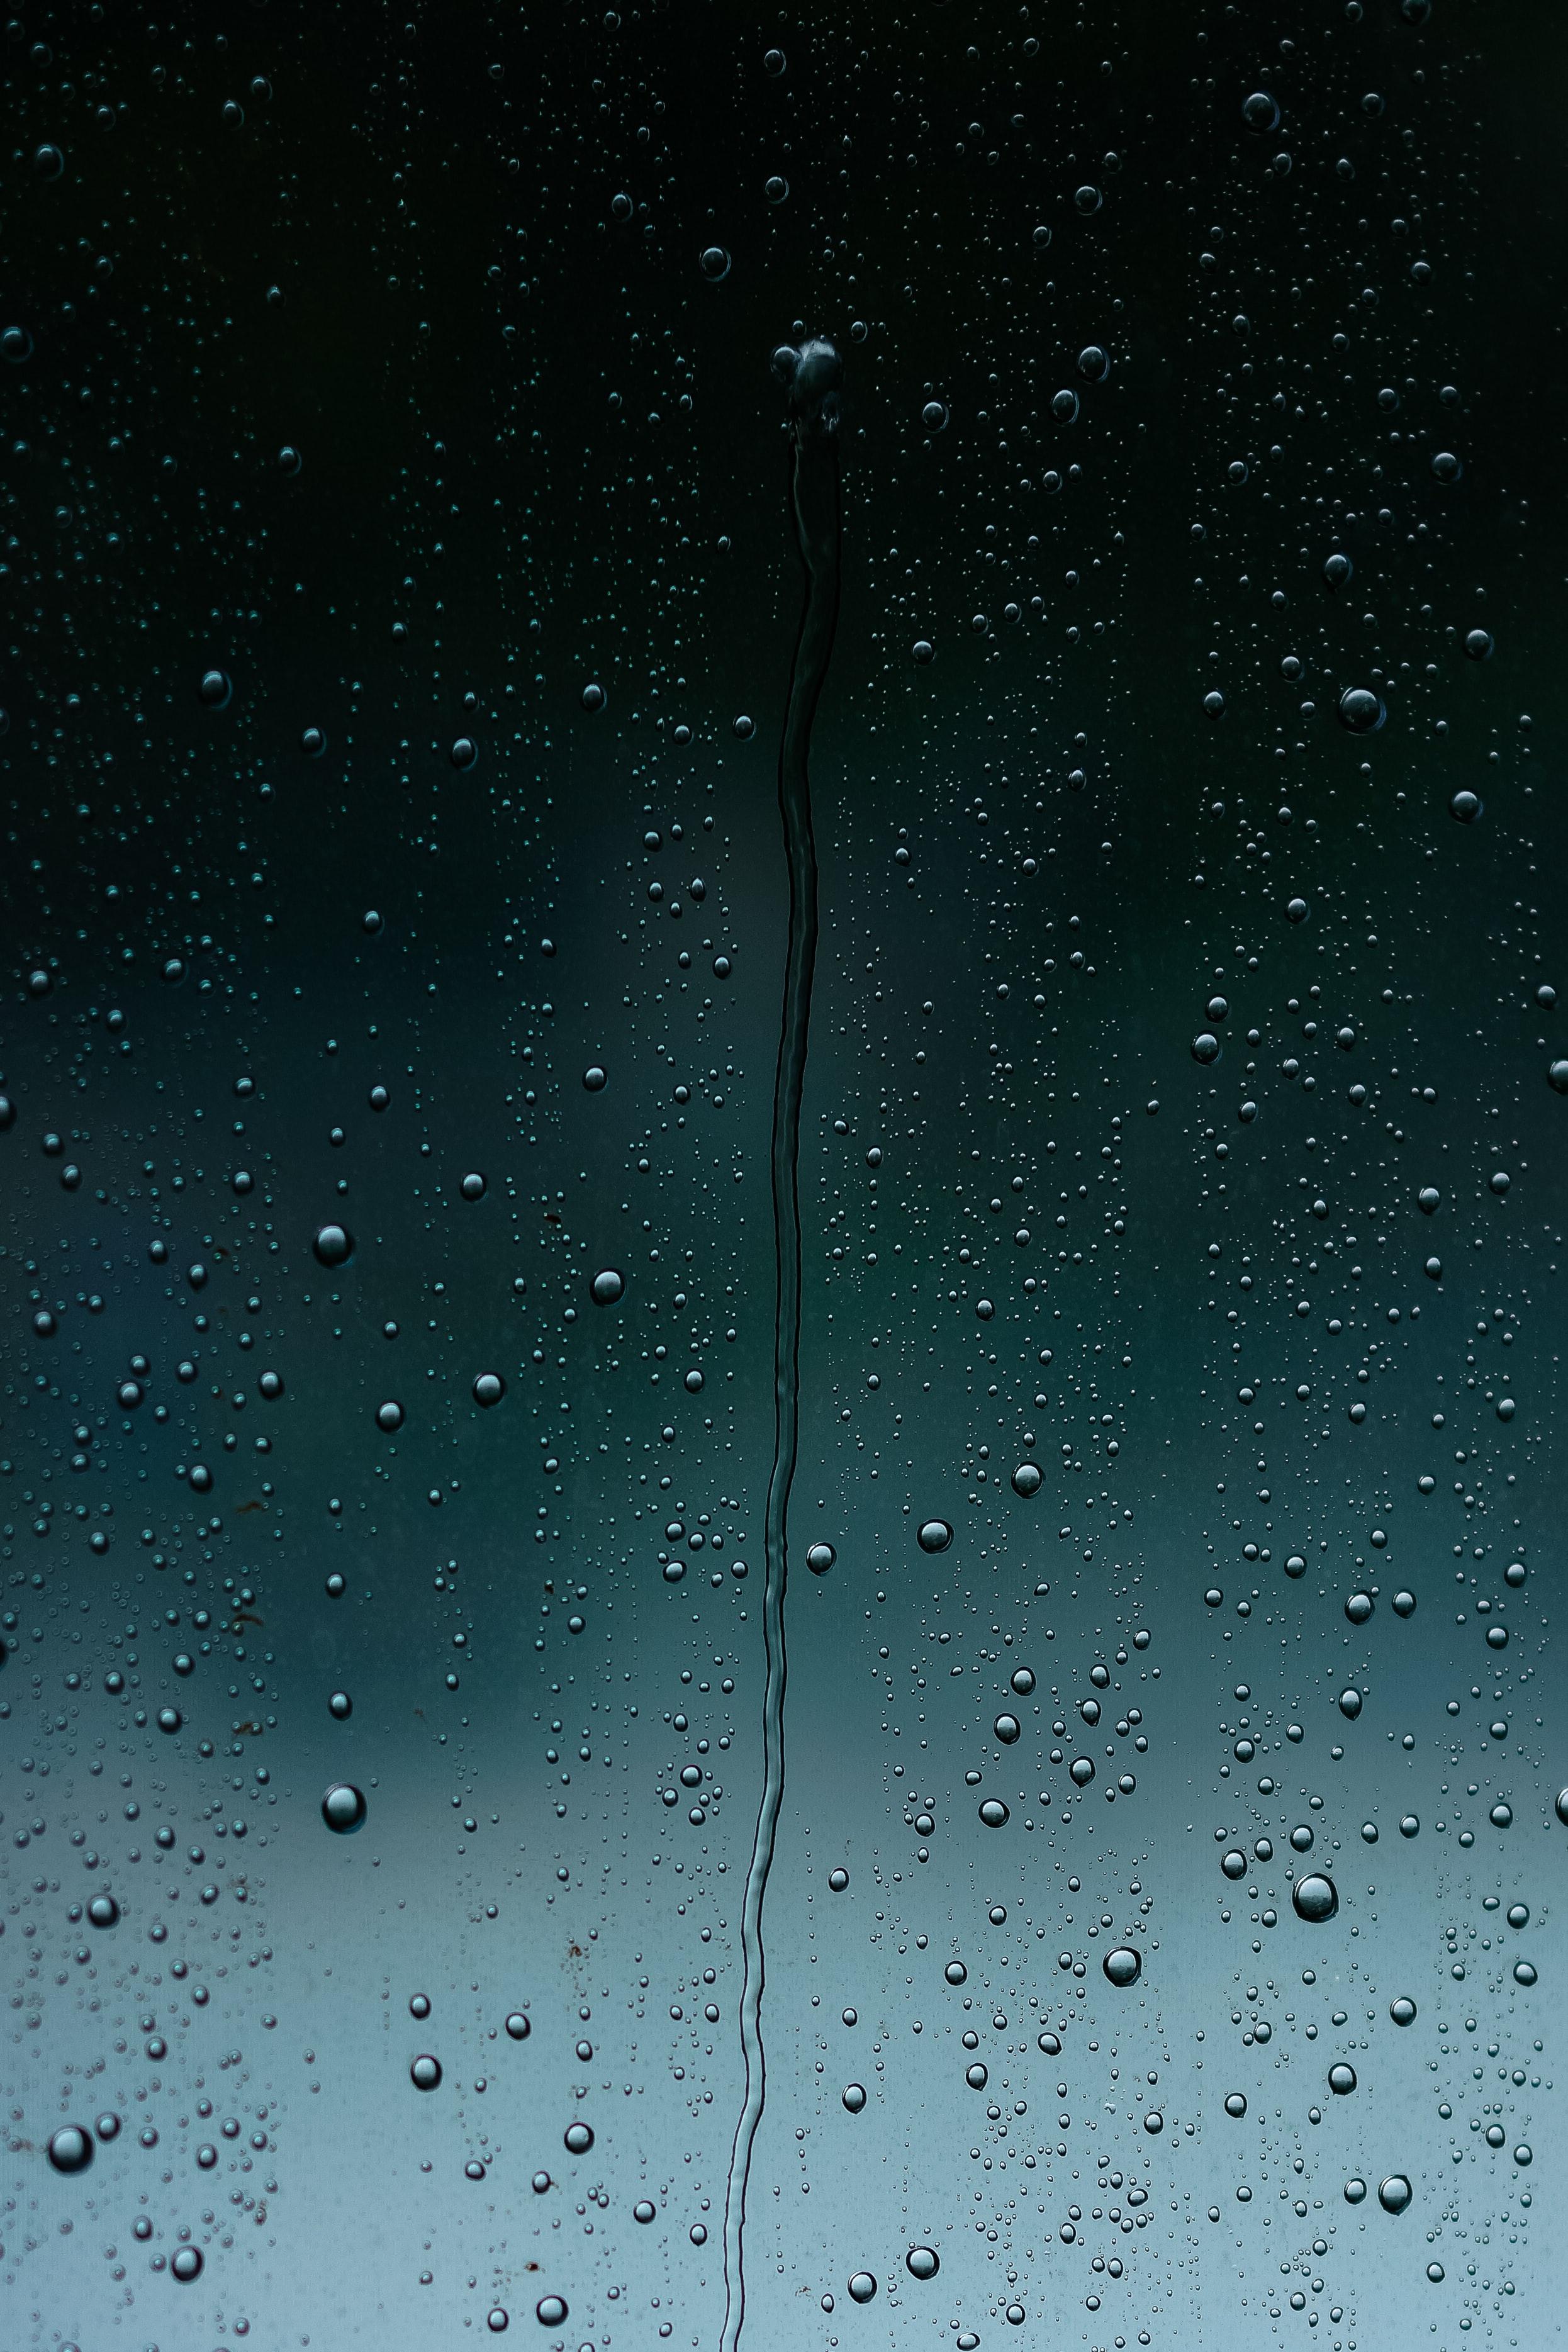 Raindrops Over Glass New York IPhone Wallpaper Iphoneswallpapers Com  IPhone  Wallpapers  iPhone Wallpapers